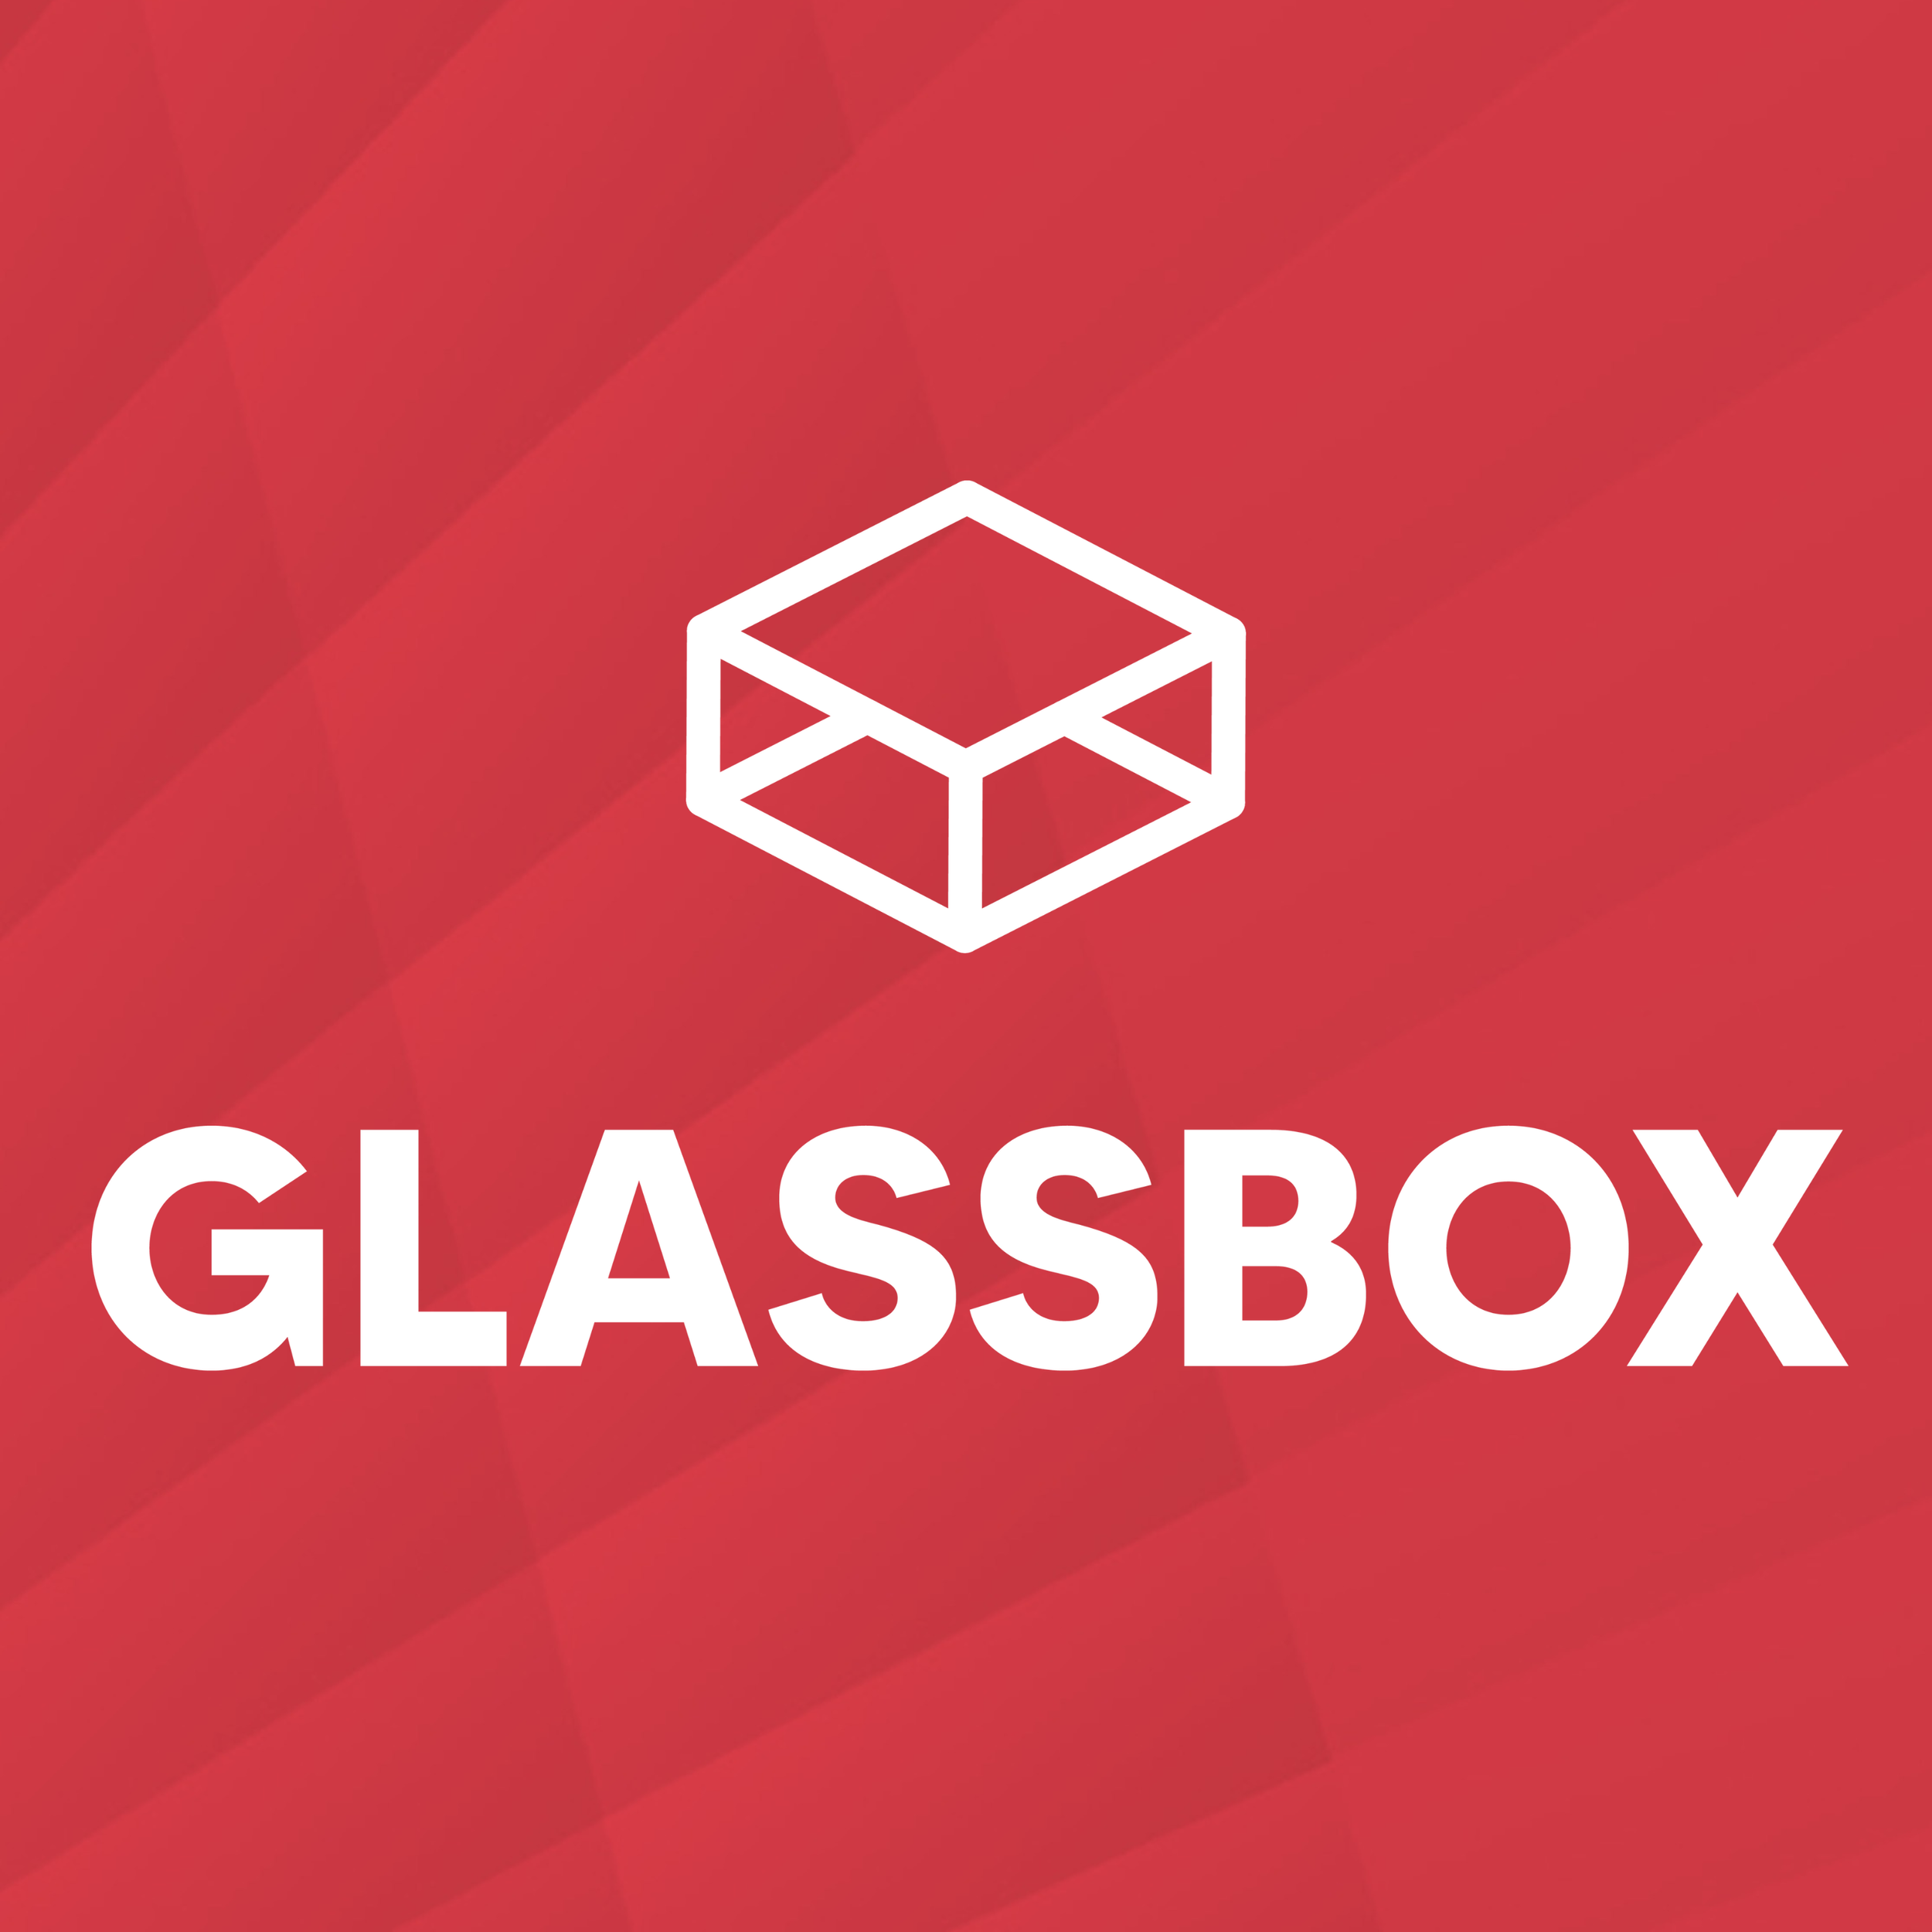 Glassbox Media